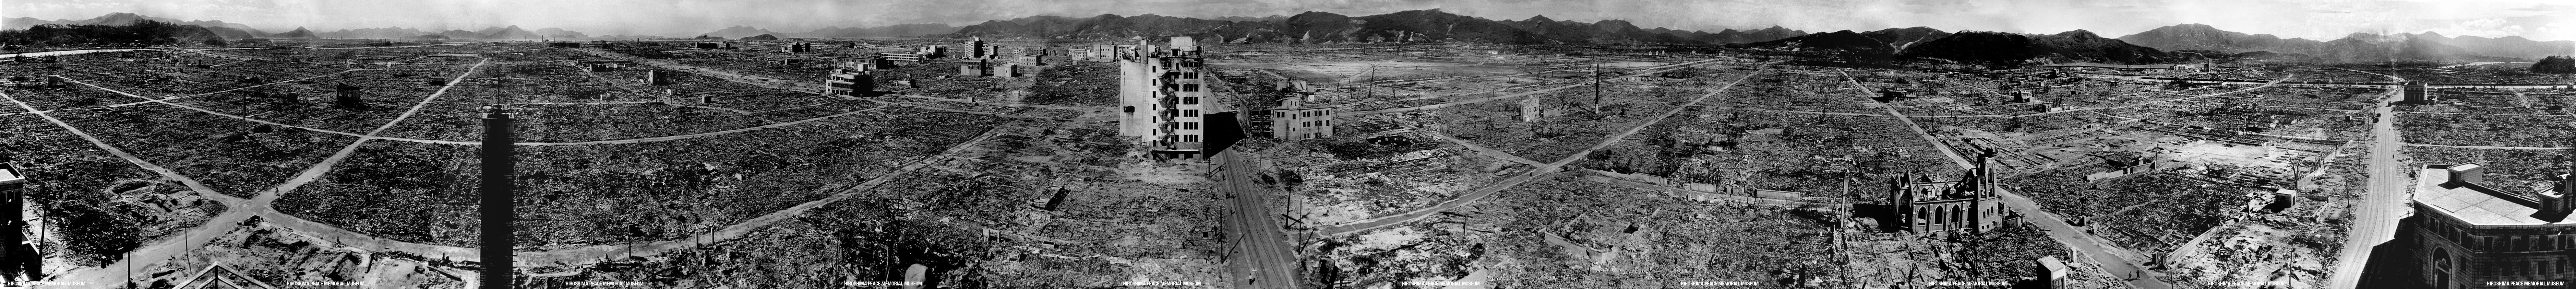 Hiroshima Panorama